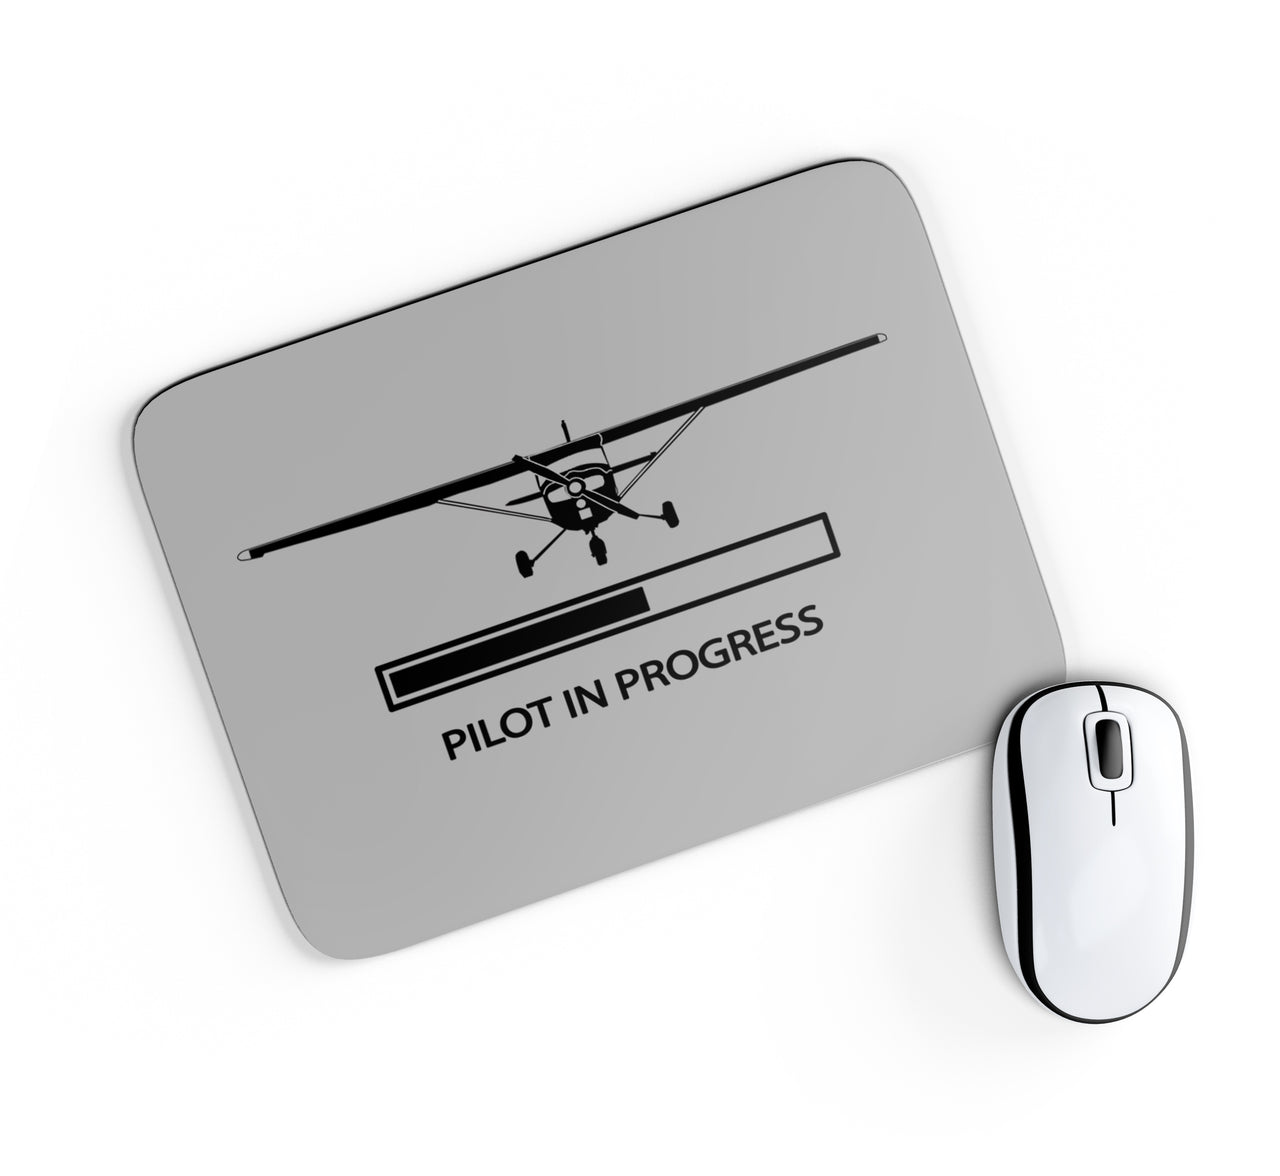 Pilot In Progress (Cessna) Designed Mouse Pads